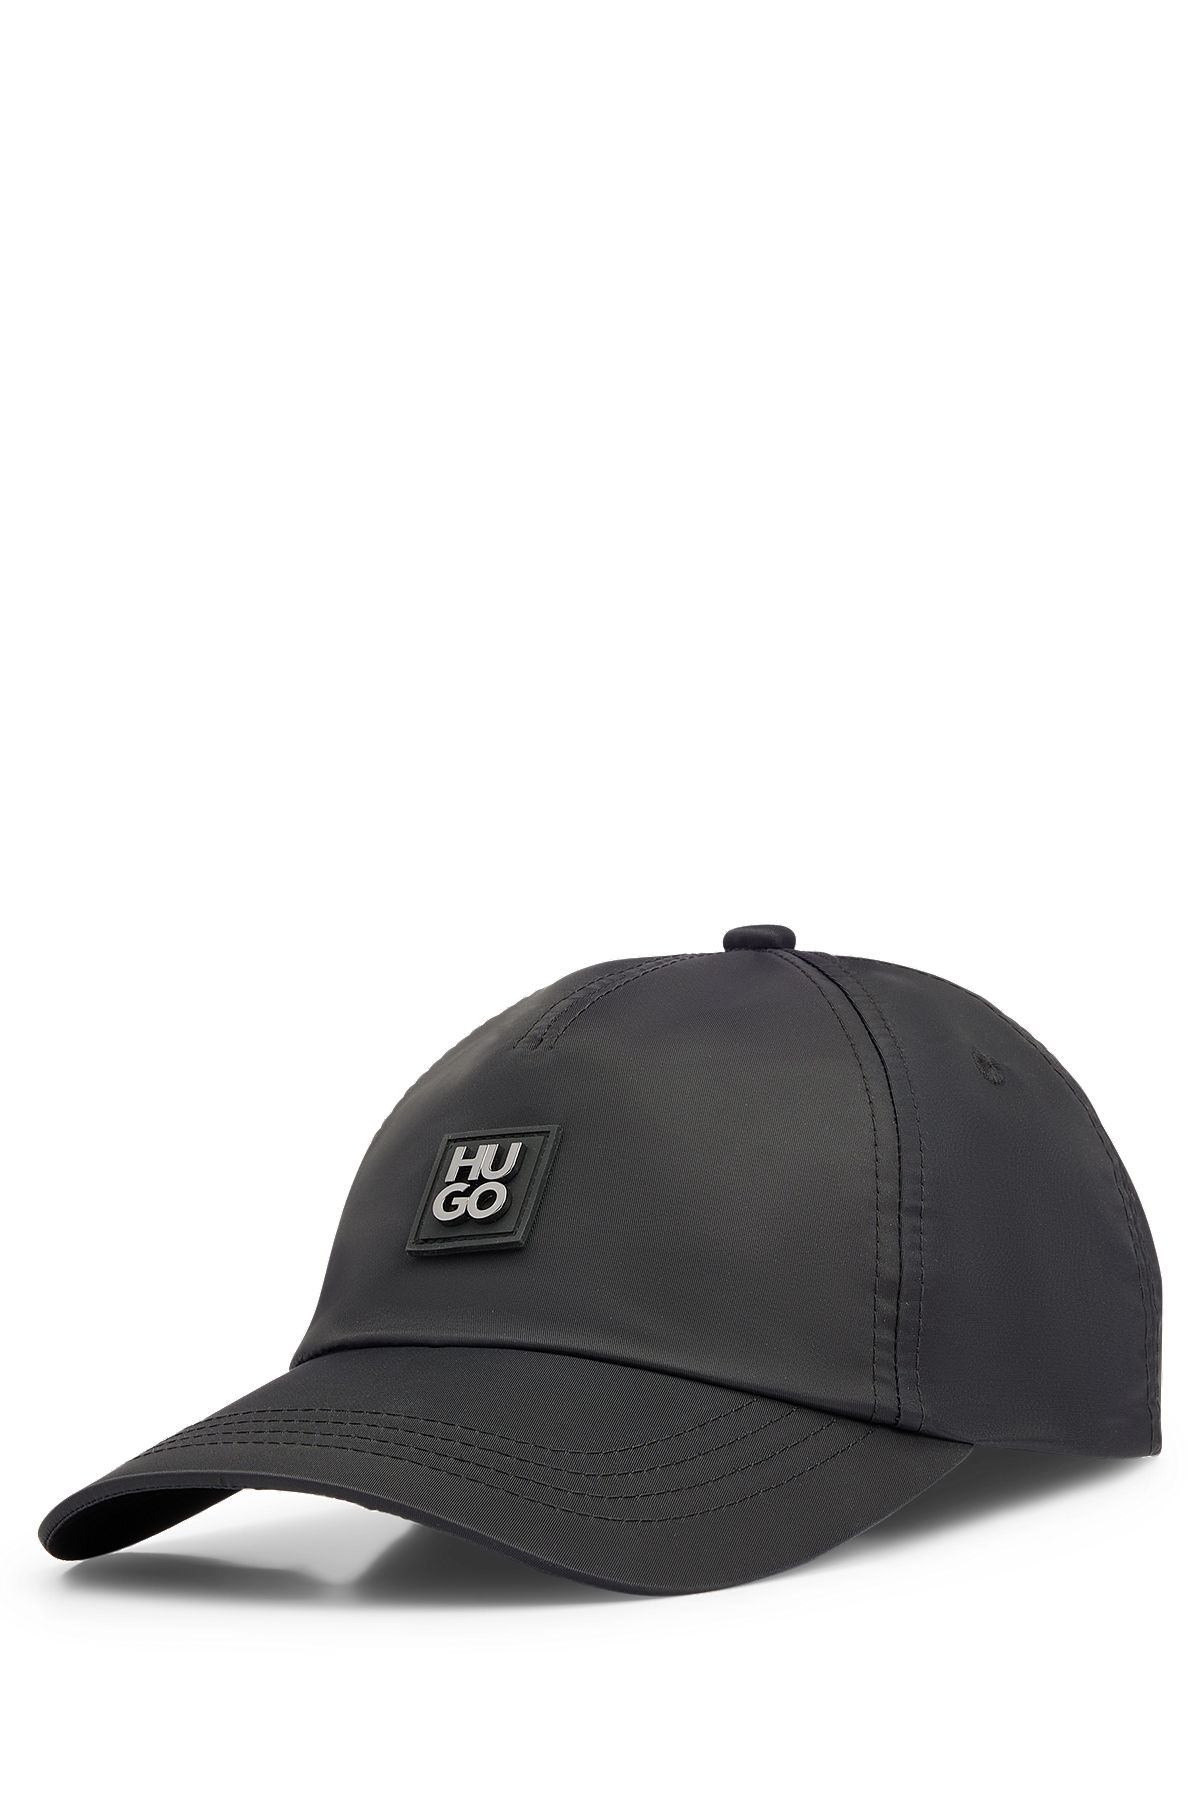 Waterproof-nylon cap with stacked logo badge, Black